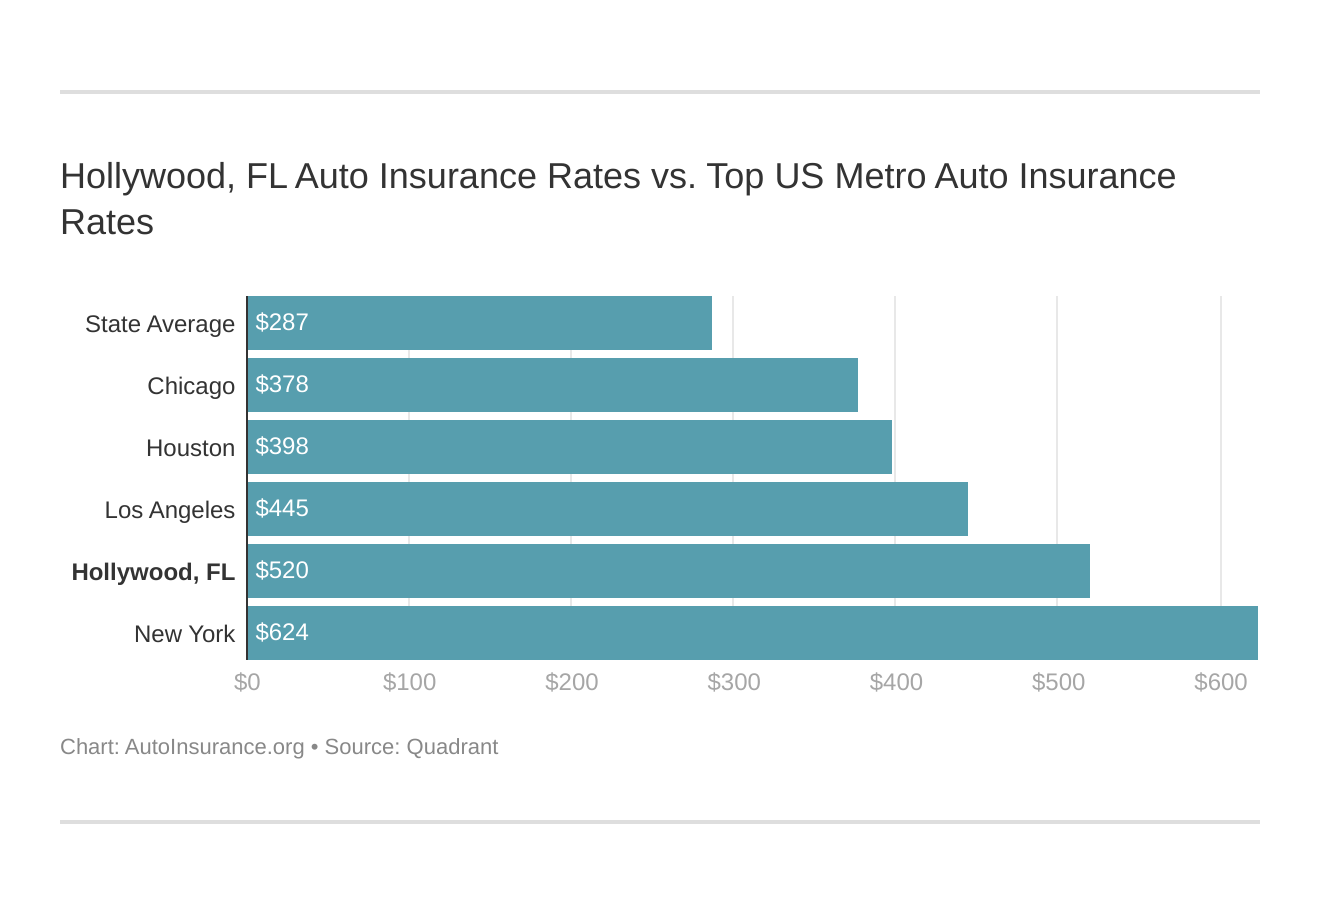 Hollywood, FL Auto Insurance Rates vs. Top US Metro Auto Insurance Rates